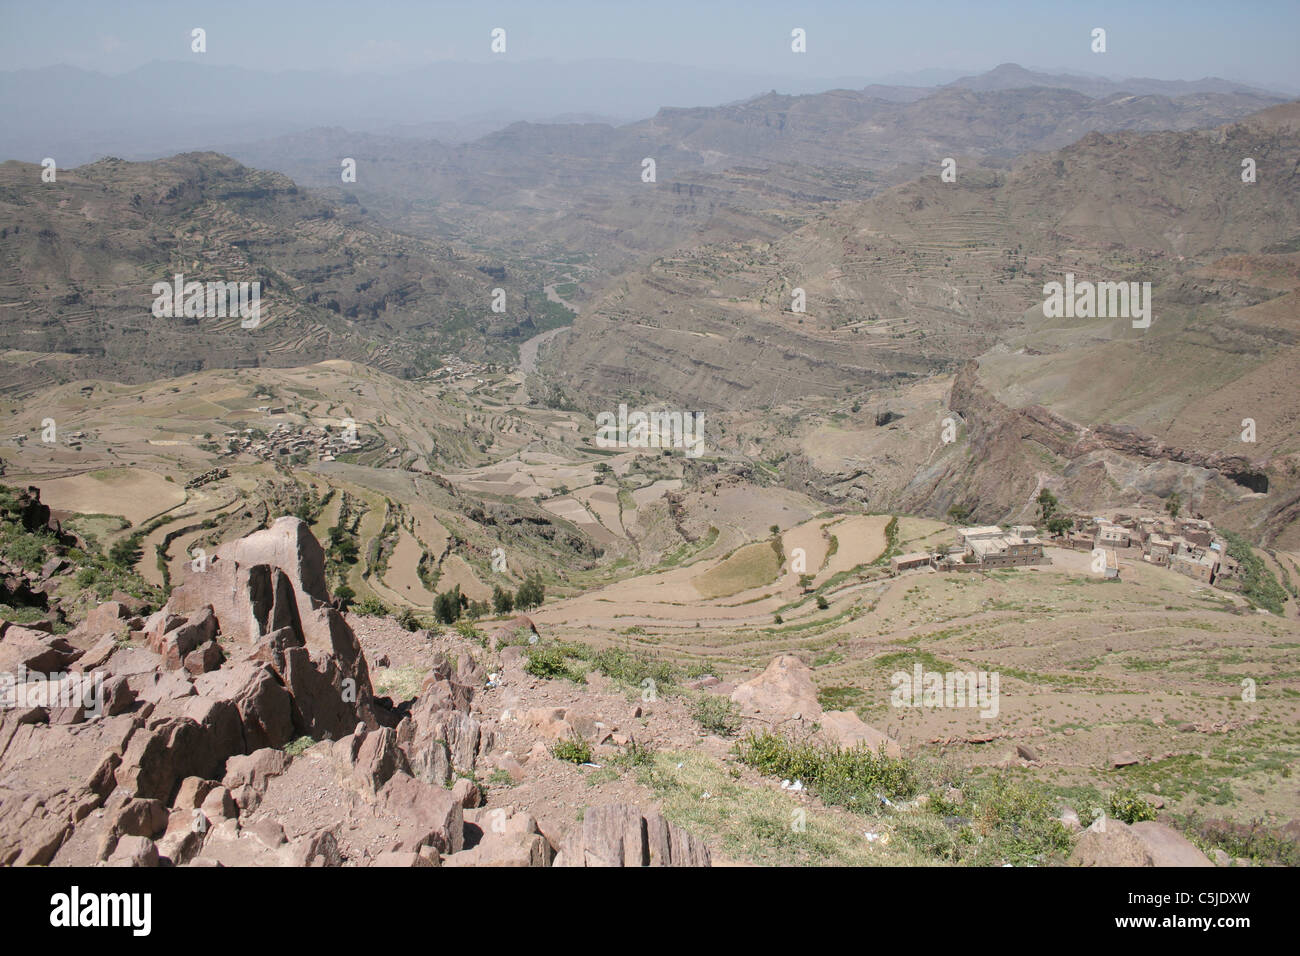 Landscape from Yemen, on the Arabian Peninsula, Mideast Stock Photo